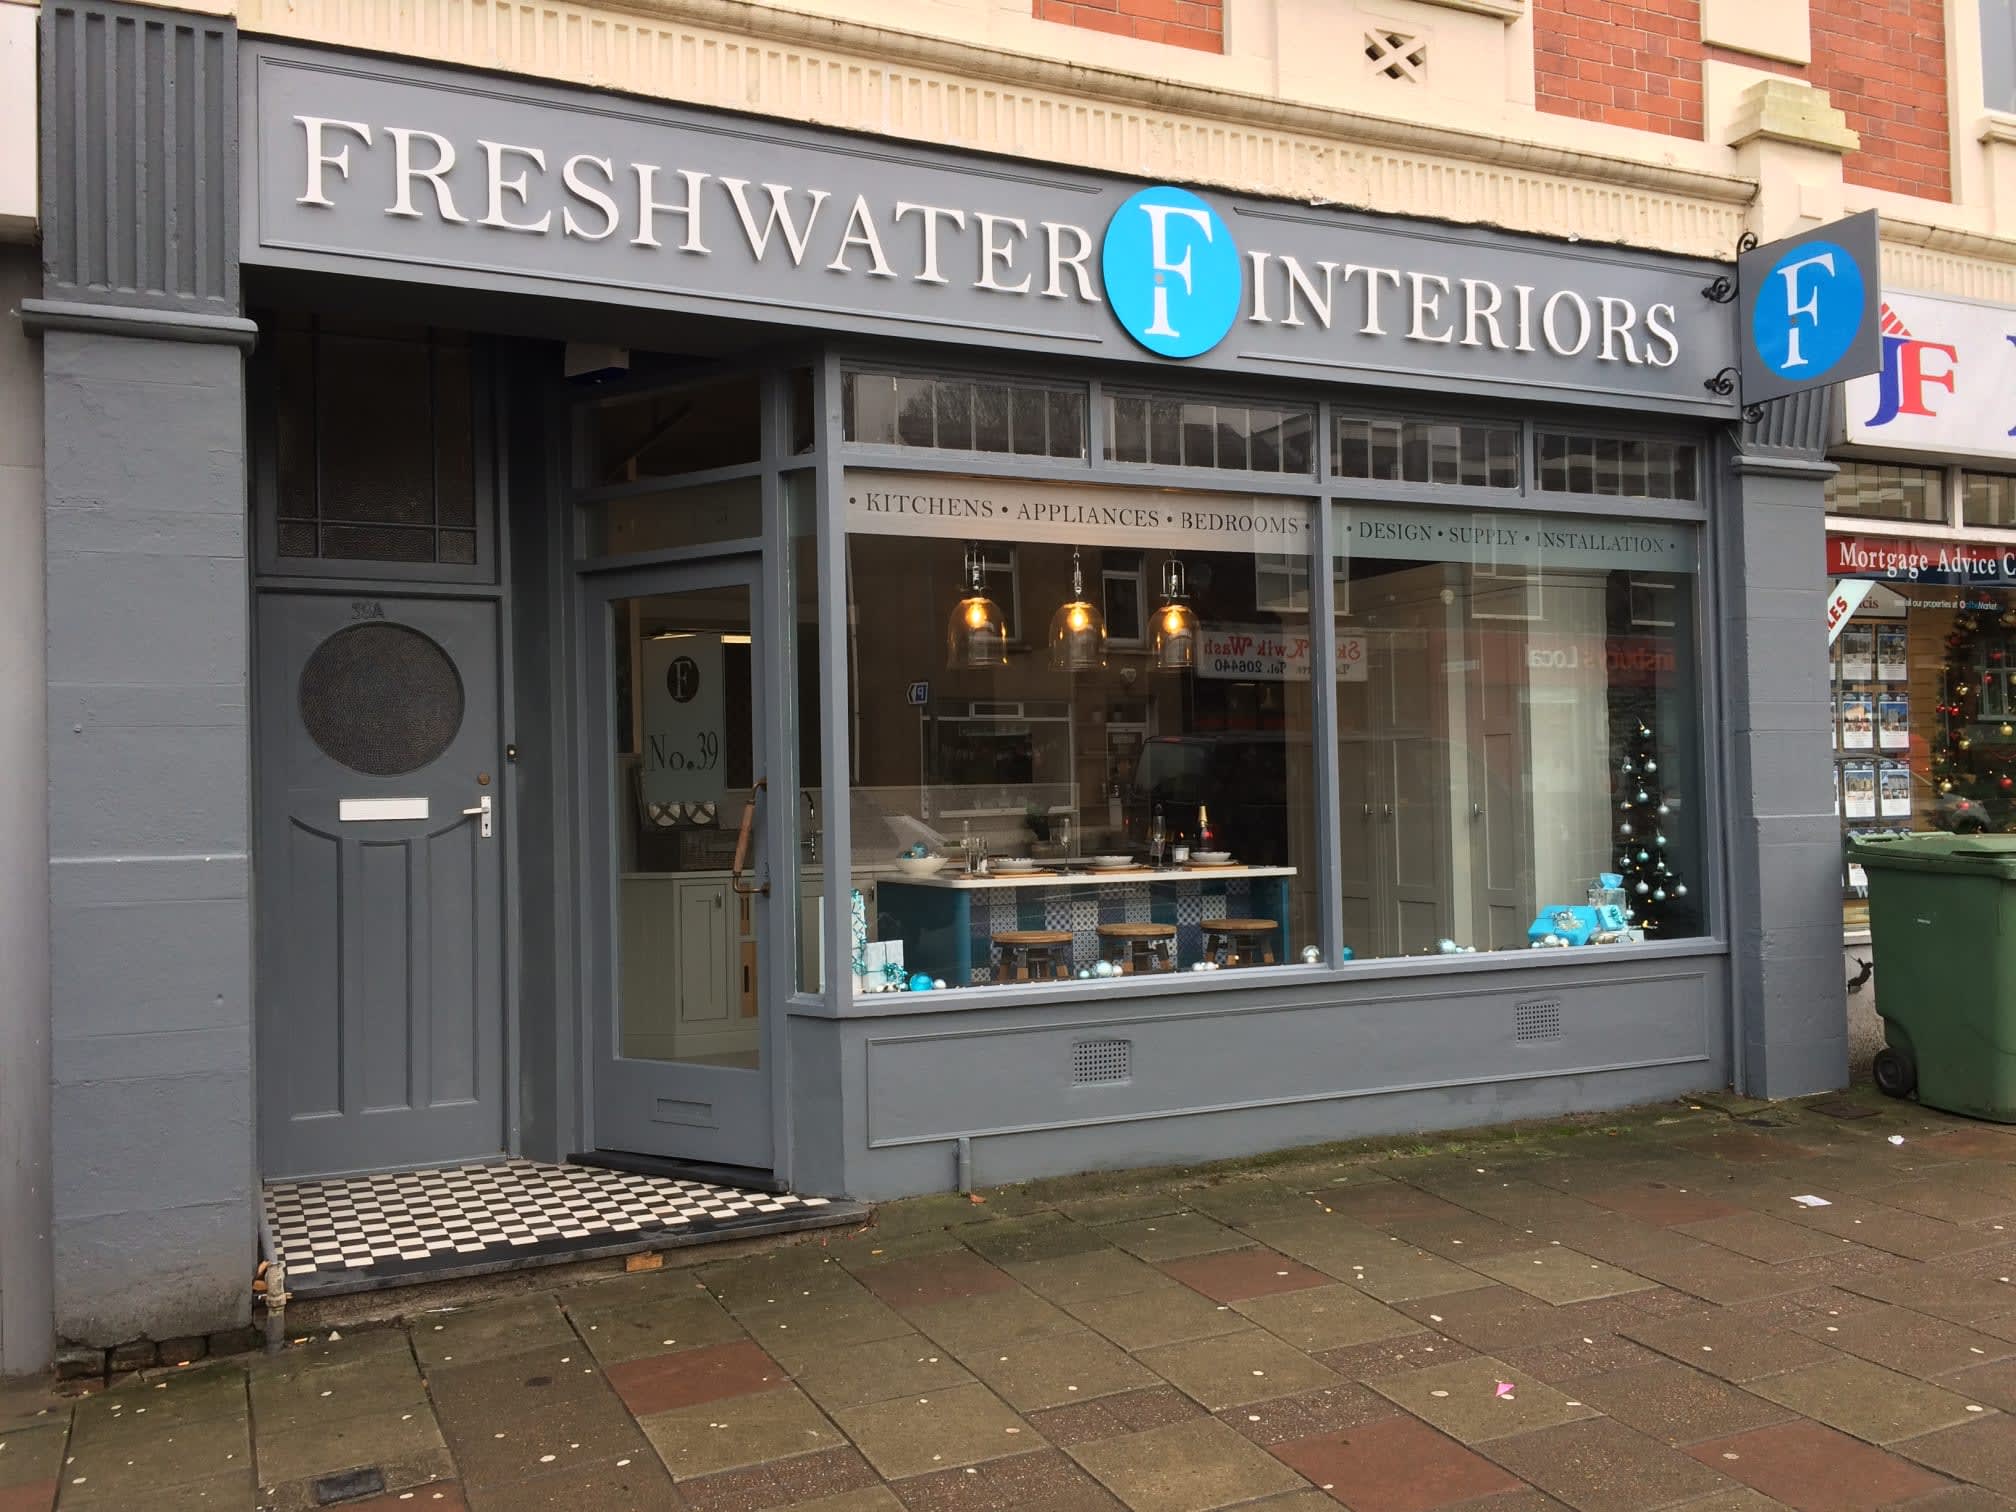 Images Freshwater Interiors Ltd